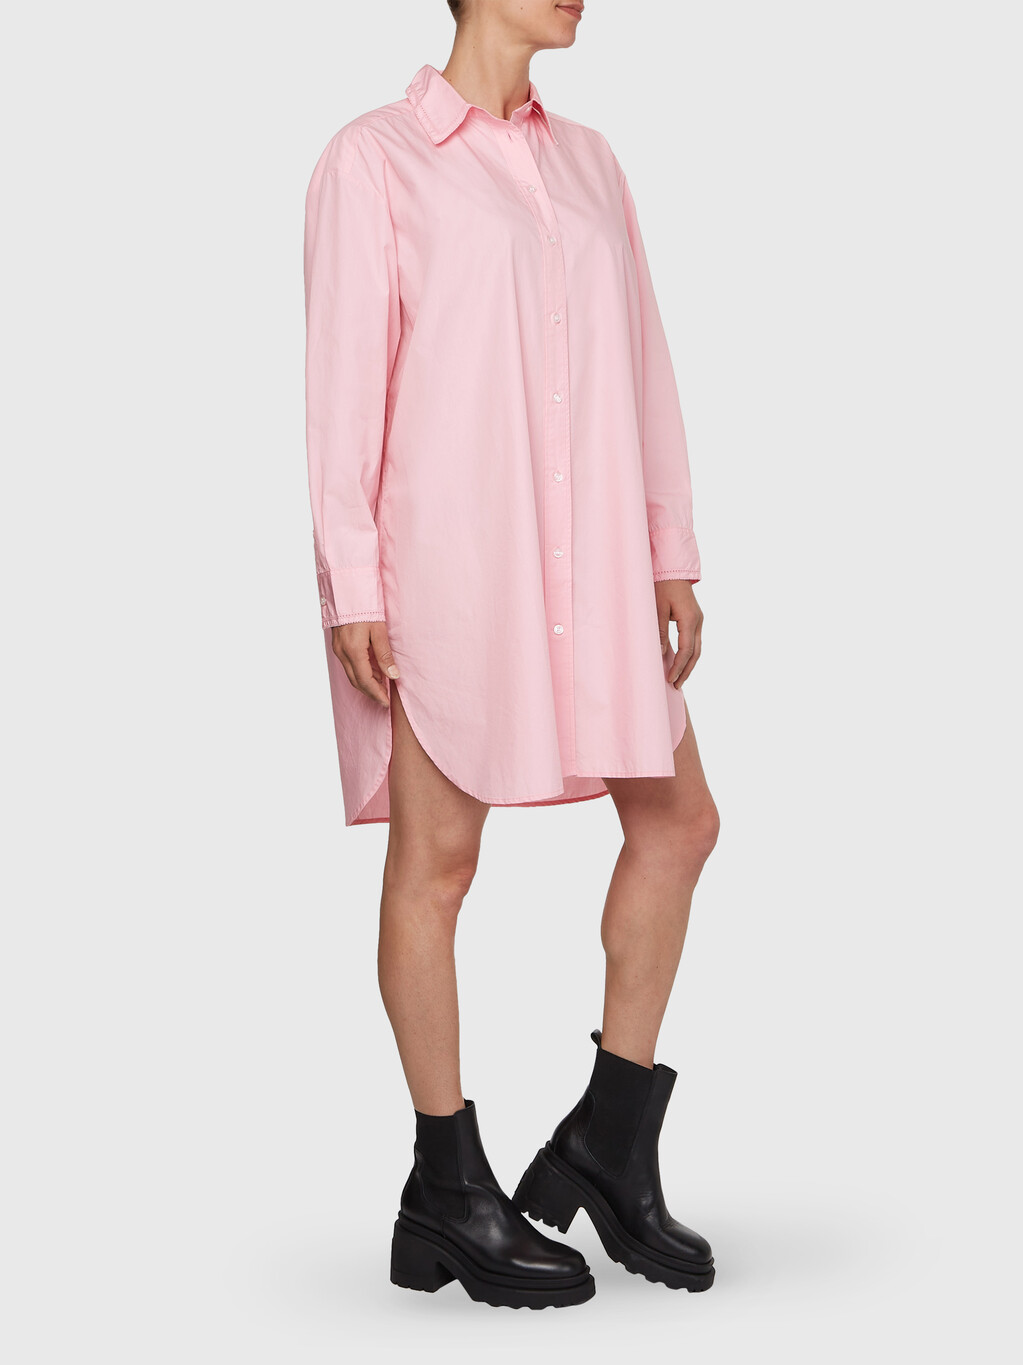 超寬鬆及膝裇衫連身裙, Classic Pink, hi-res